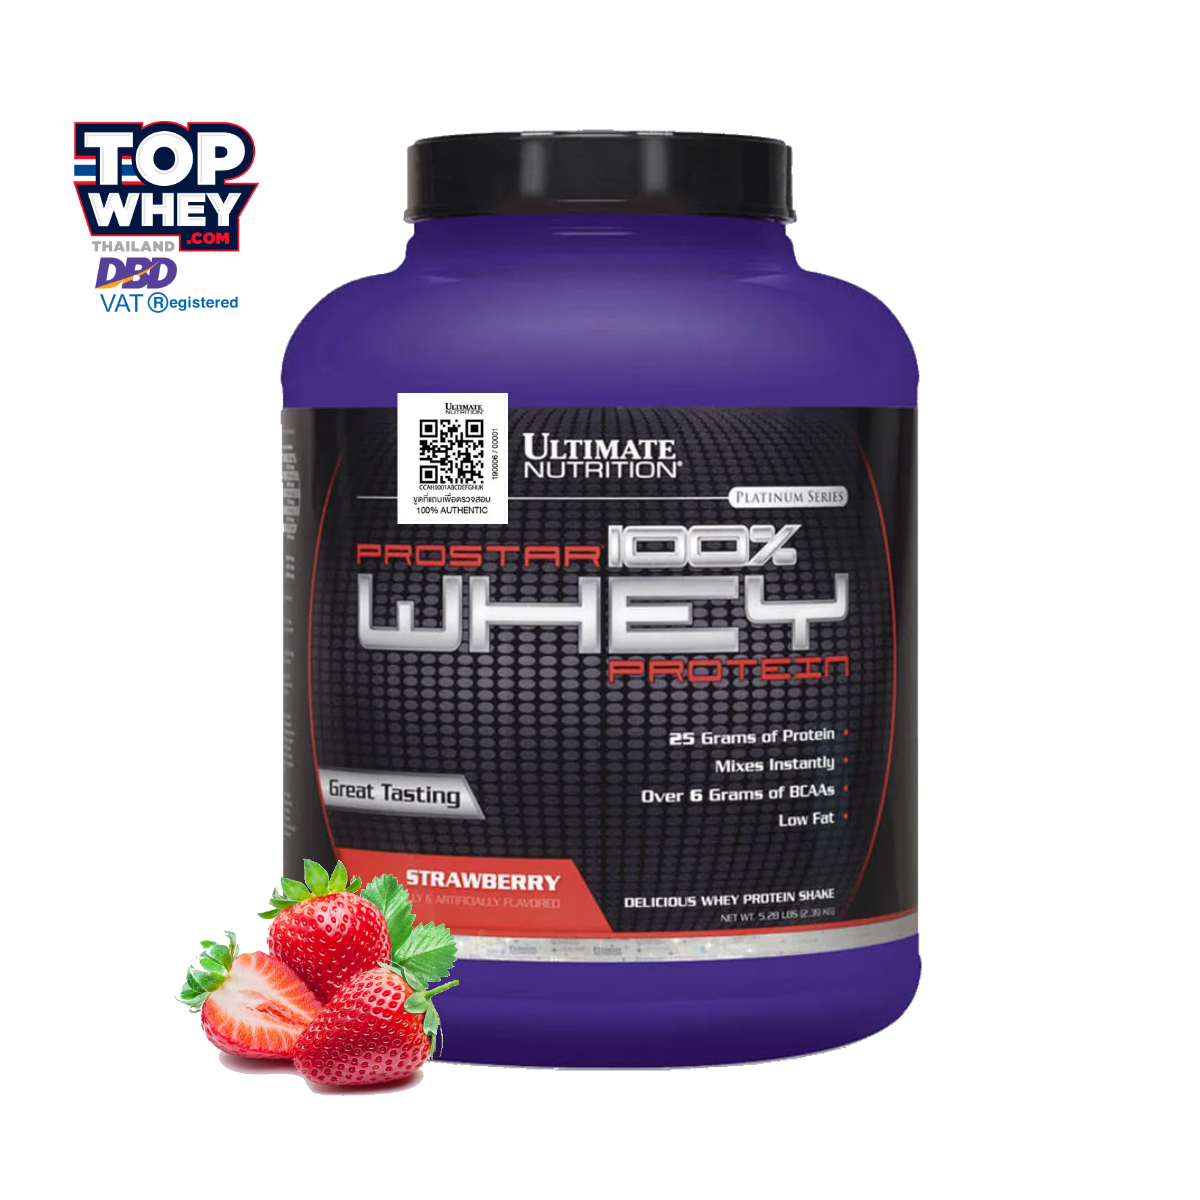 Ultimate Nutrition ProStar Whey Protein 5.28lbs – Strawberry – เวย์โปรตีนเสริมสร้างกล้ามเนื้อ   ฟื้นฟู-ซ่อมแซมกล้ามเนื้อที่สึกหรอ  มีกรดอะมิโนจำเป็นมากกว่า 20 ชนิด  สามารถทานระหว่างมื้ออาหาร ก่อน-หลังออกกำลังกาย